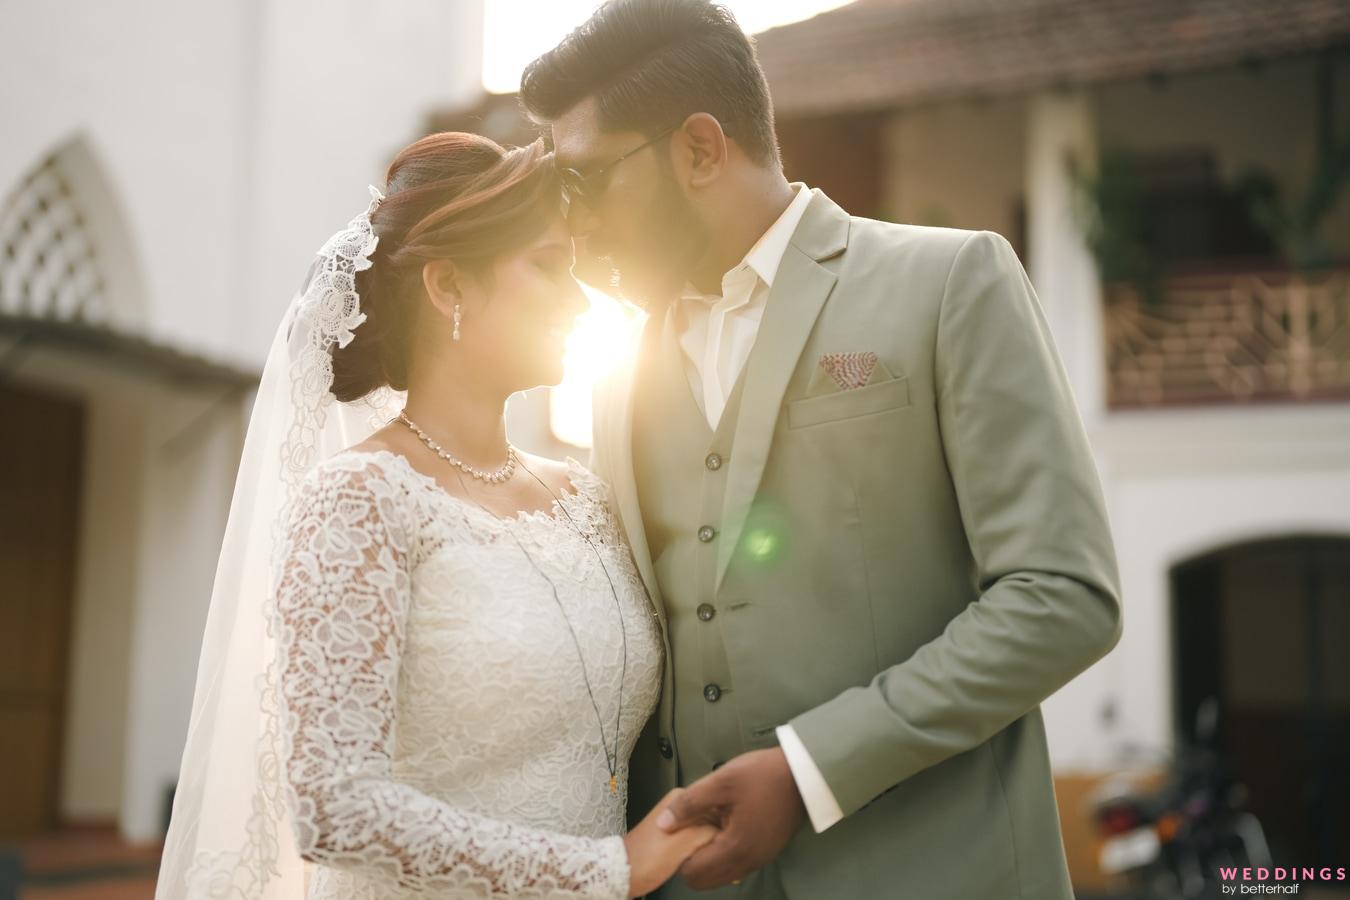 Ms to Mrs. @altheabridals #bride #dreamybride #keralawedding  #christianwedding | Instagram